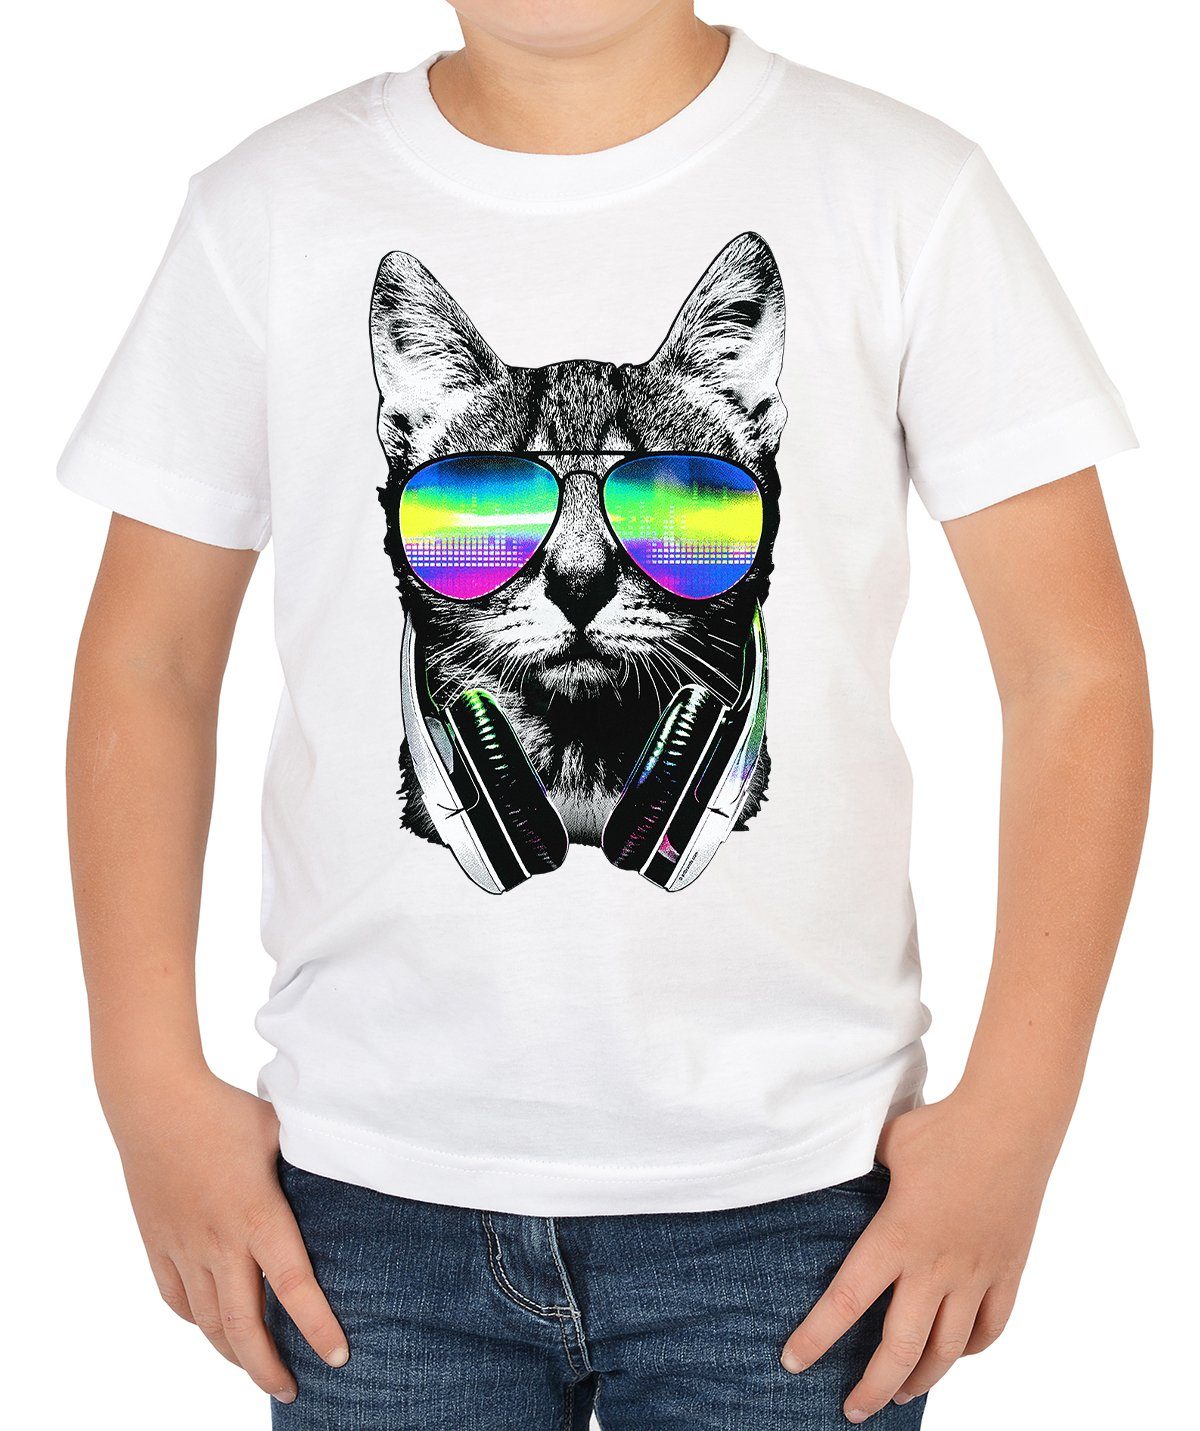 Tini - Katzenshirt Kinder für Motiv lustiges Shirts Kindershirt DJ Print-Shirt : Katzen Cat